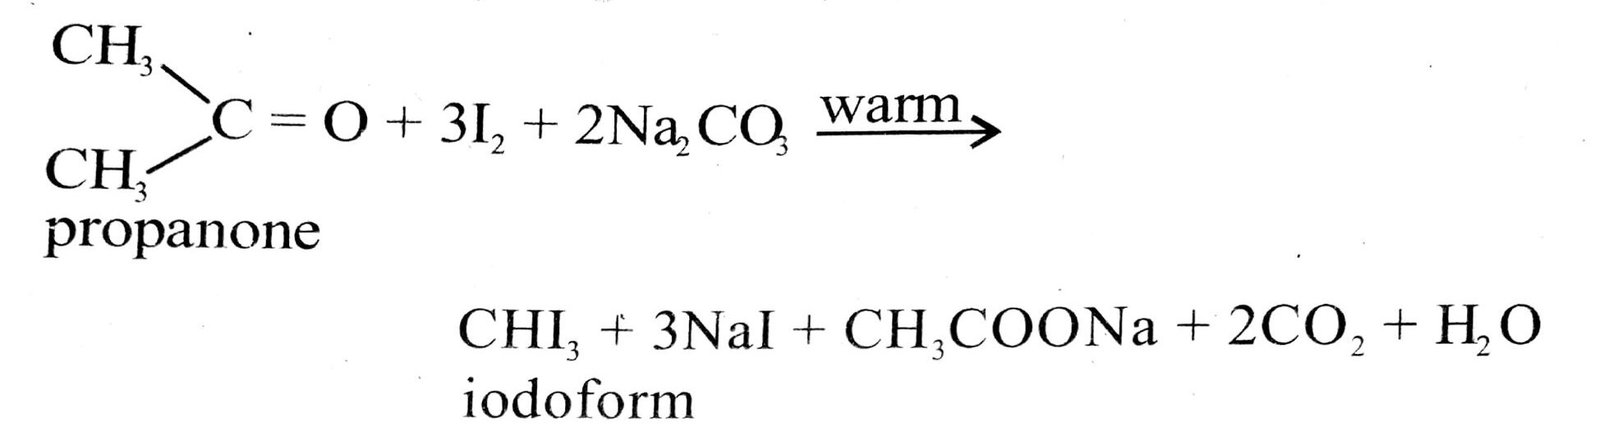 Acetone (Propanone) into Iodoform